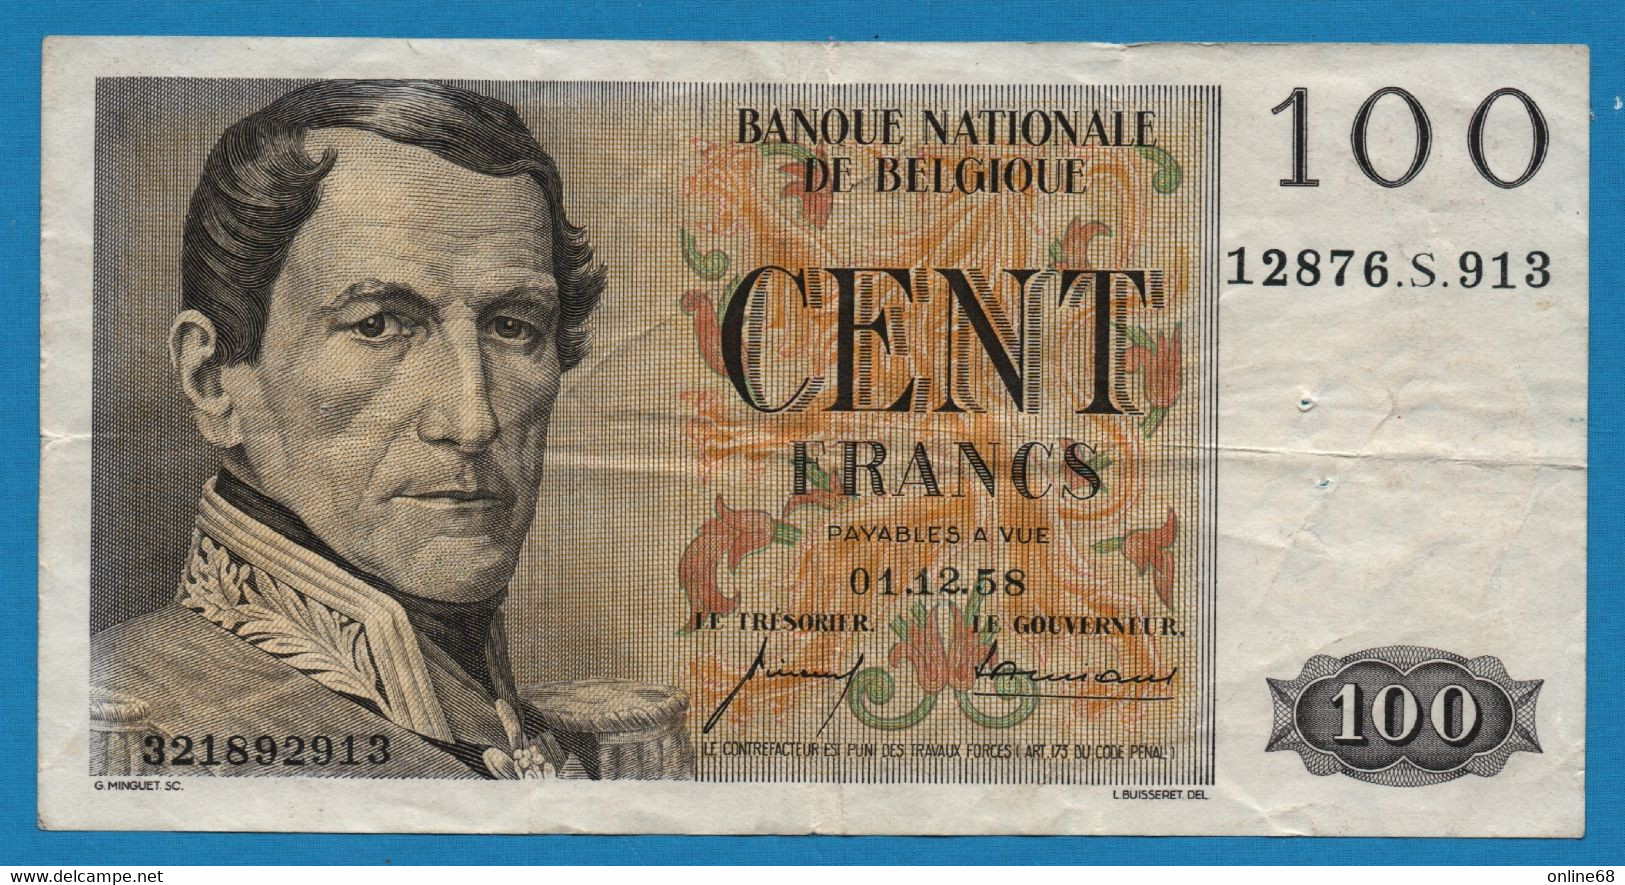 BELGIQUE 100 FRANCS 01.12.1958 # 12876.S.913 P# 129c Leopold I - 100 Francs